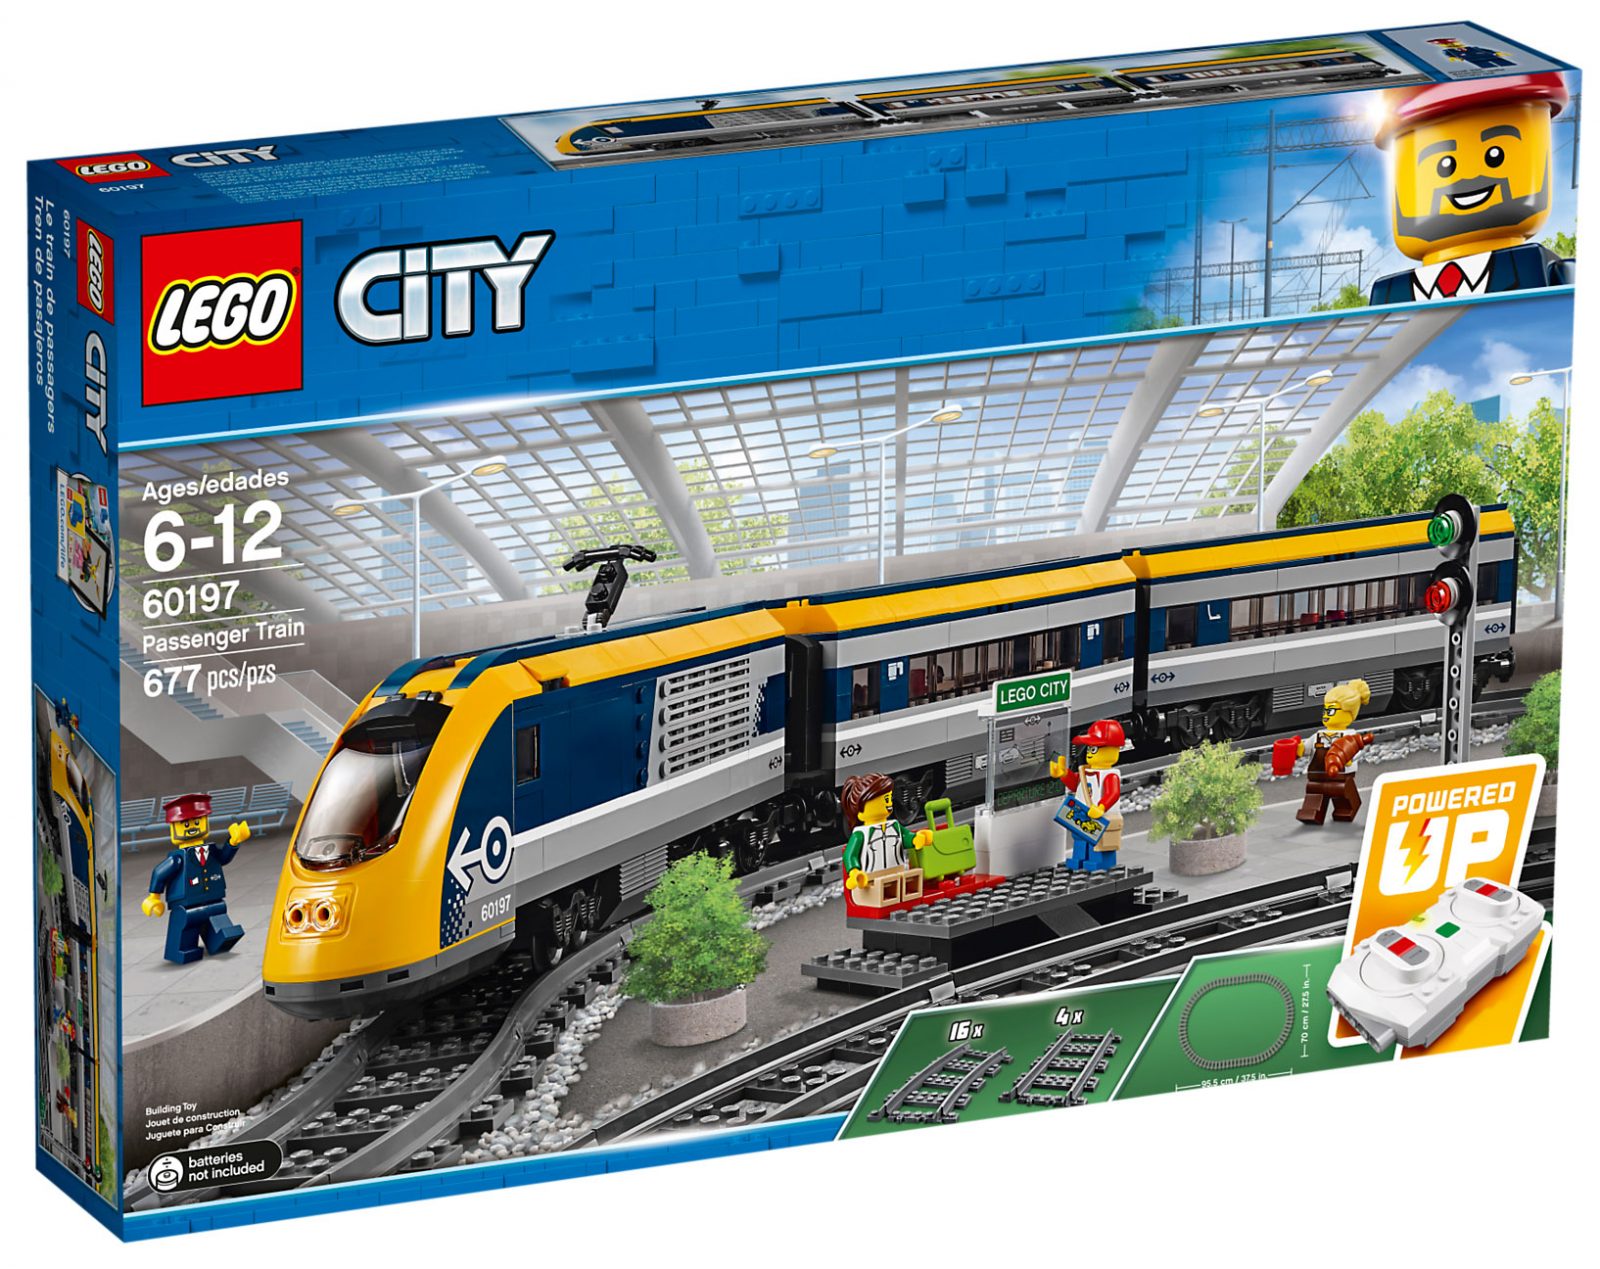 LEGO 60197 PASSENGER TRAIN 2018 CITY